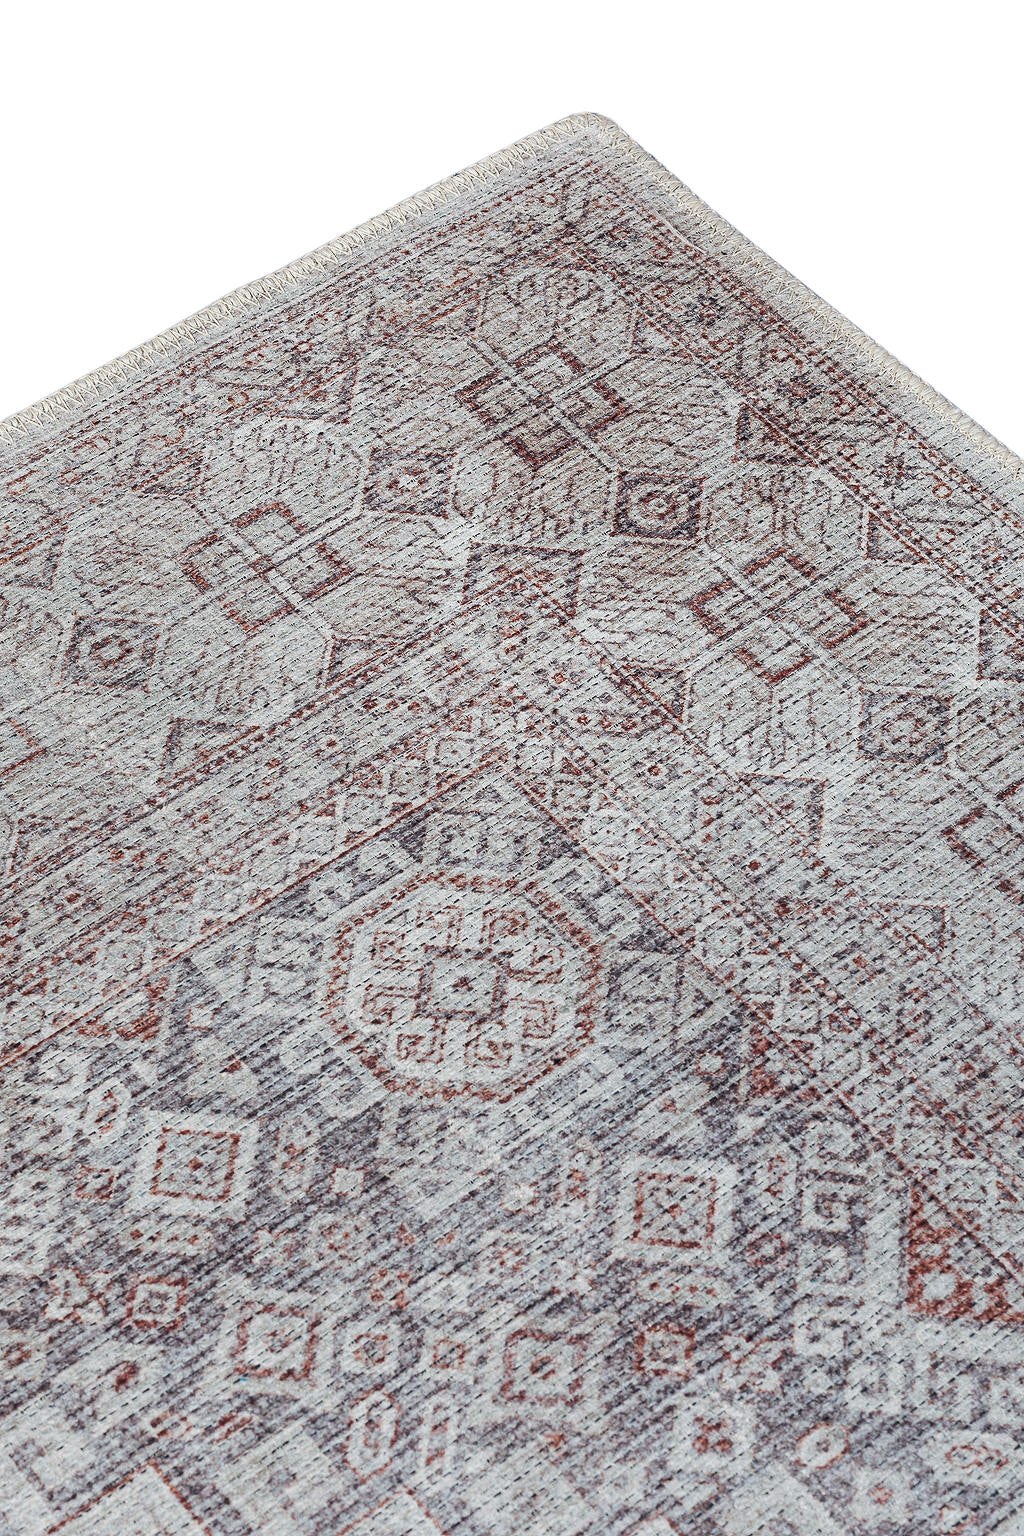 Grey bordered vintage style rug